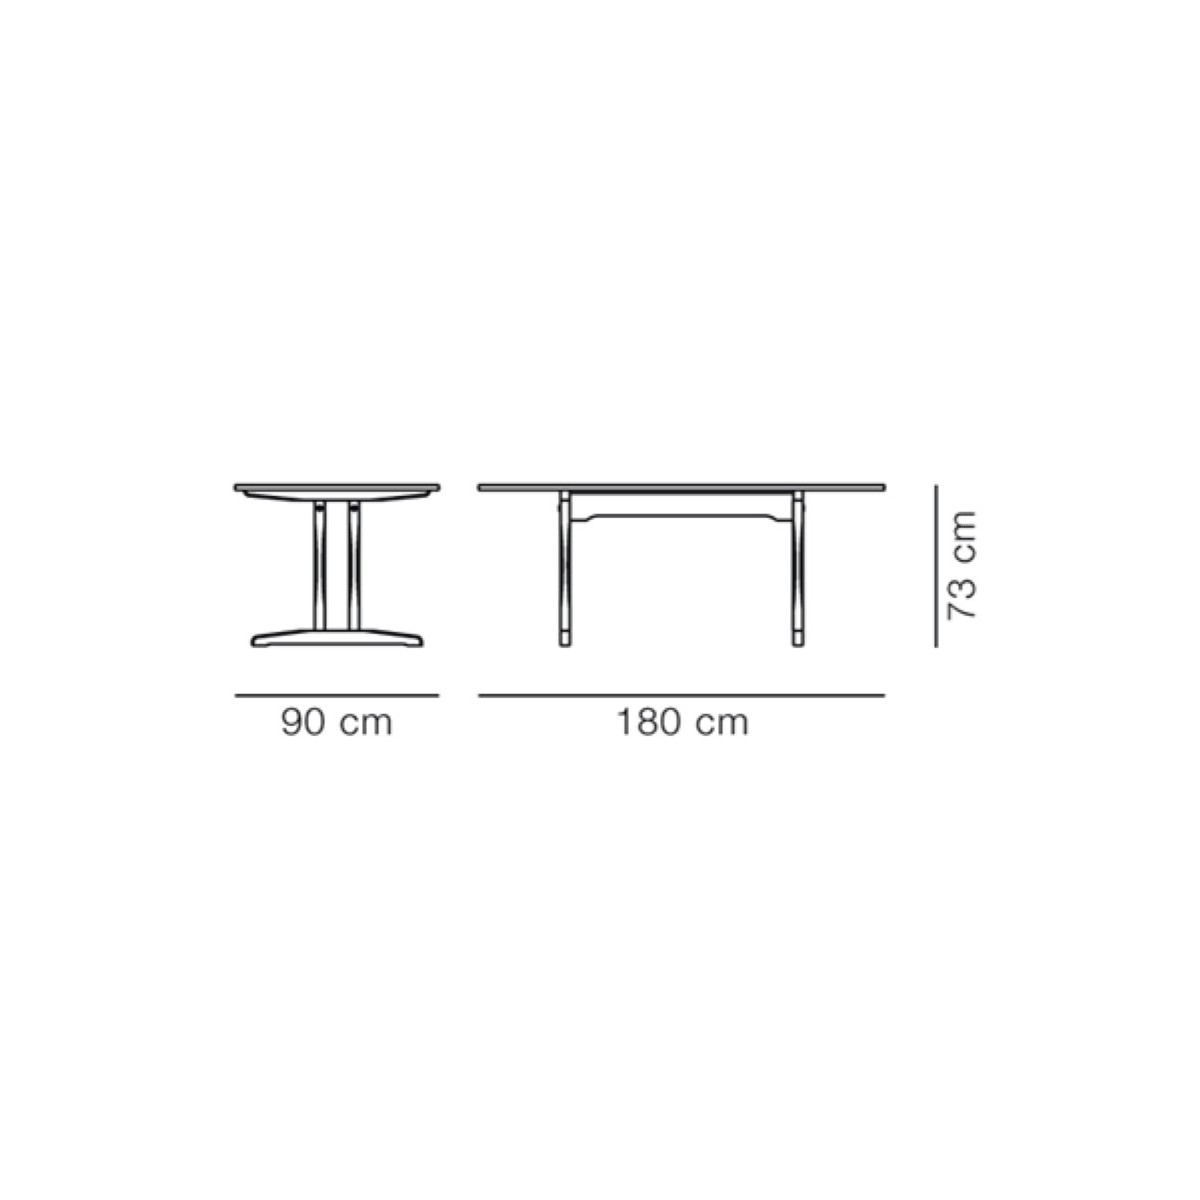 180 x 90 x H73 cm – model 6290 – C18 Table